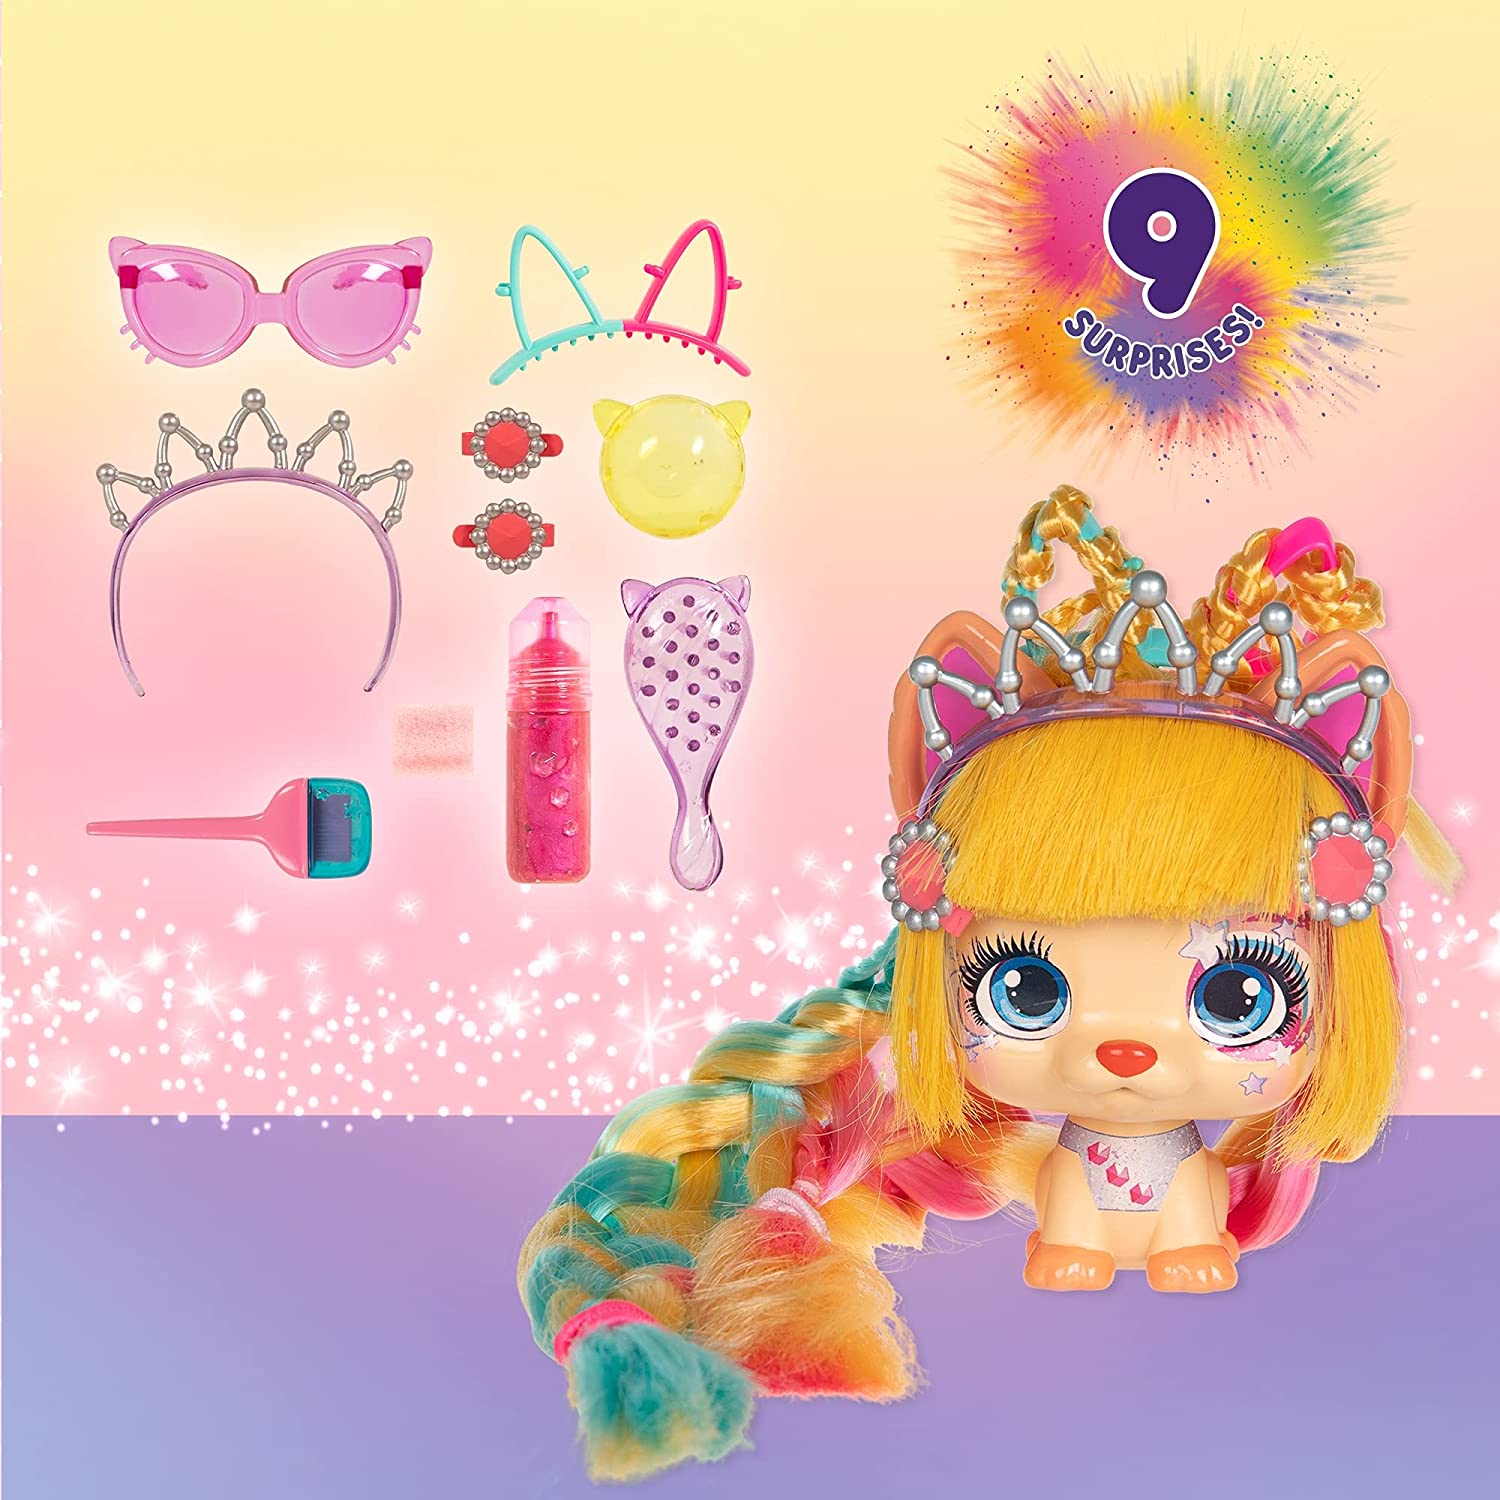 VIP Pets Celebripets - Includes 1 VIP Pets Doll and 10 Surprises! 